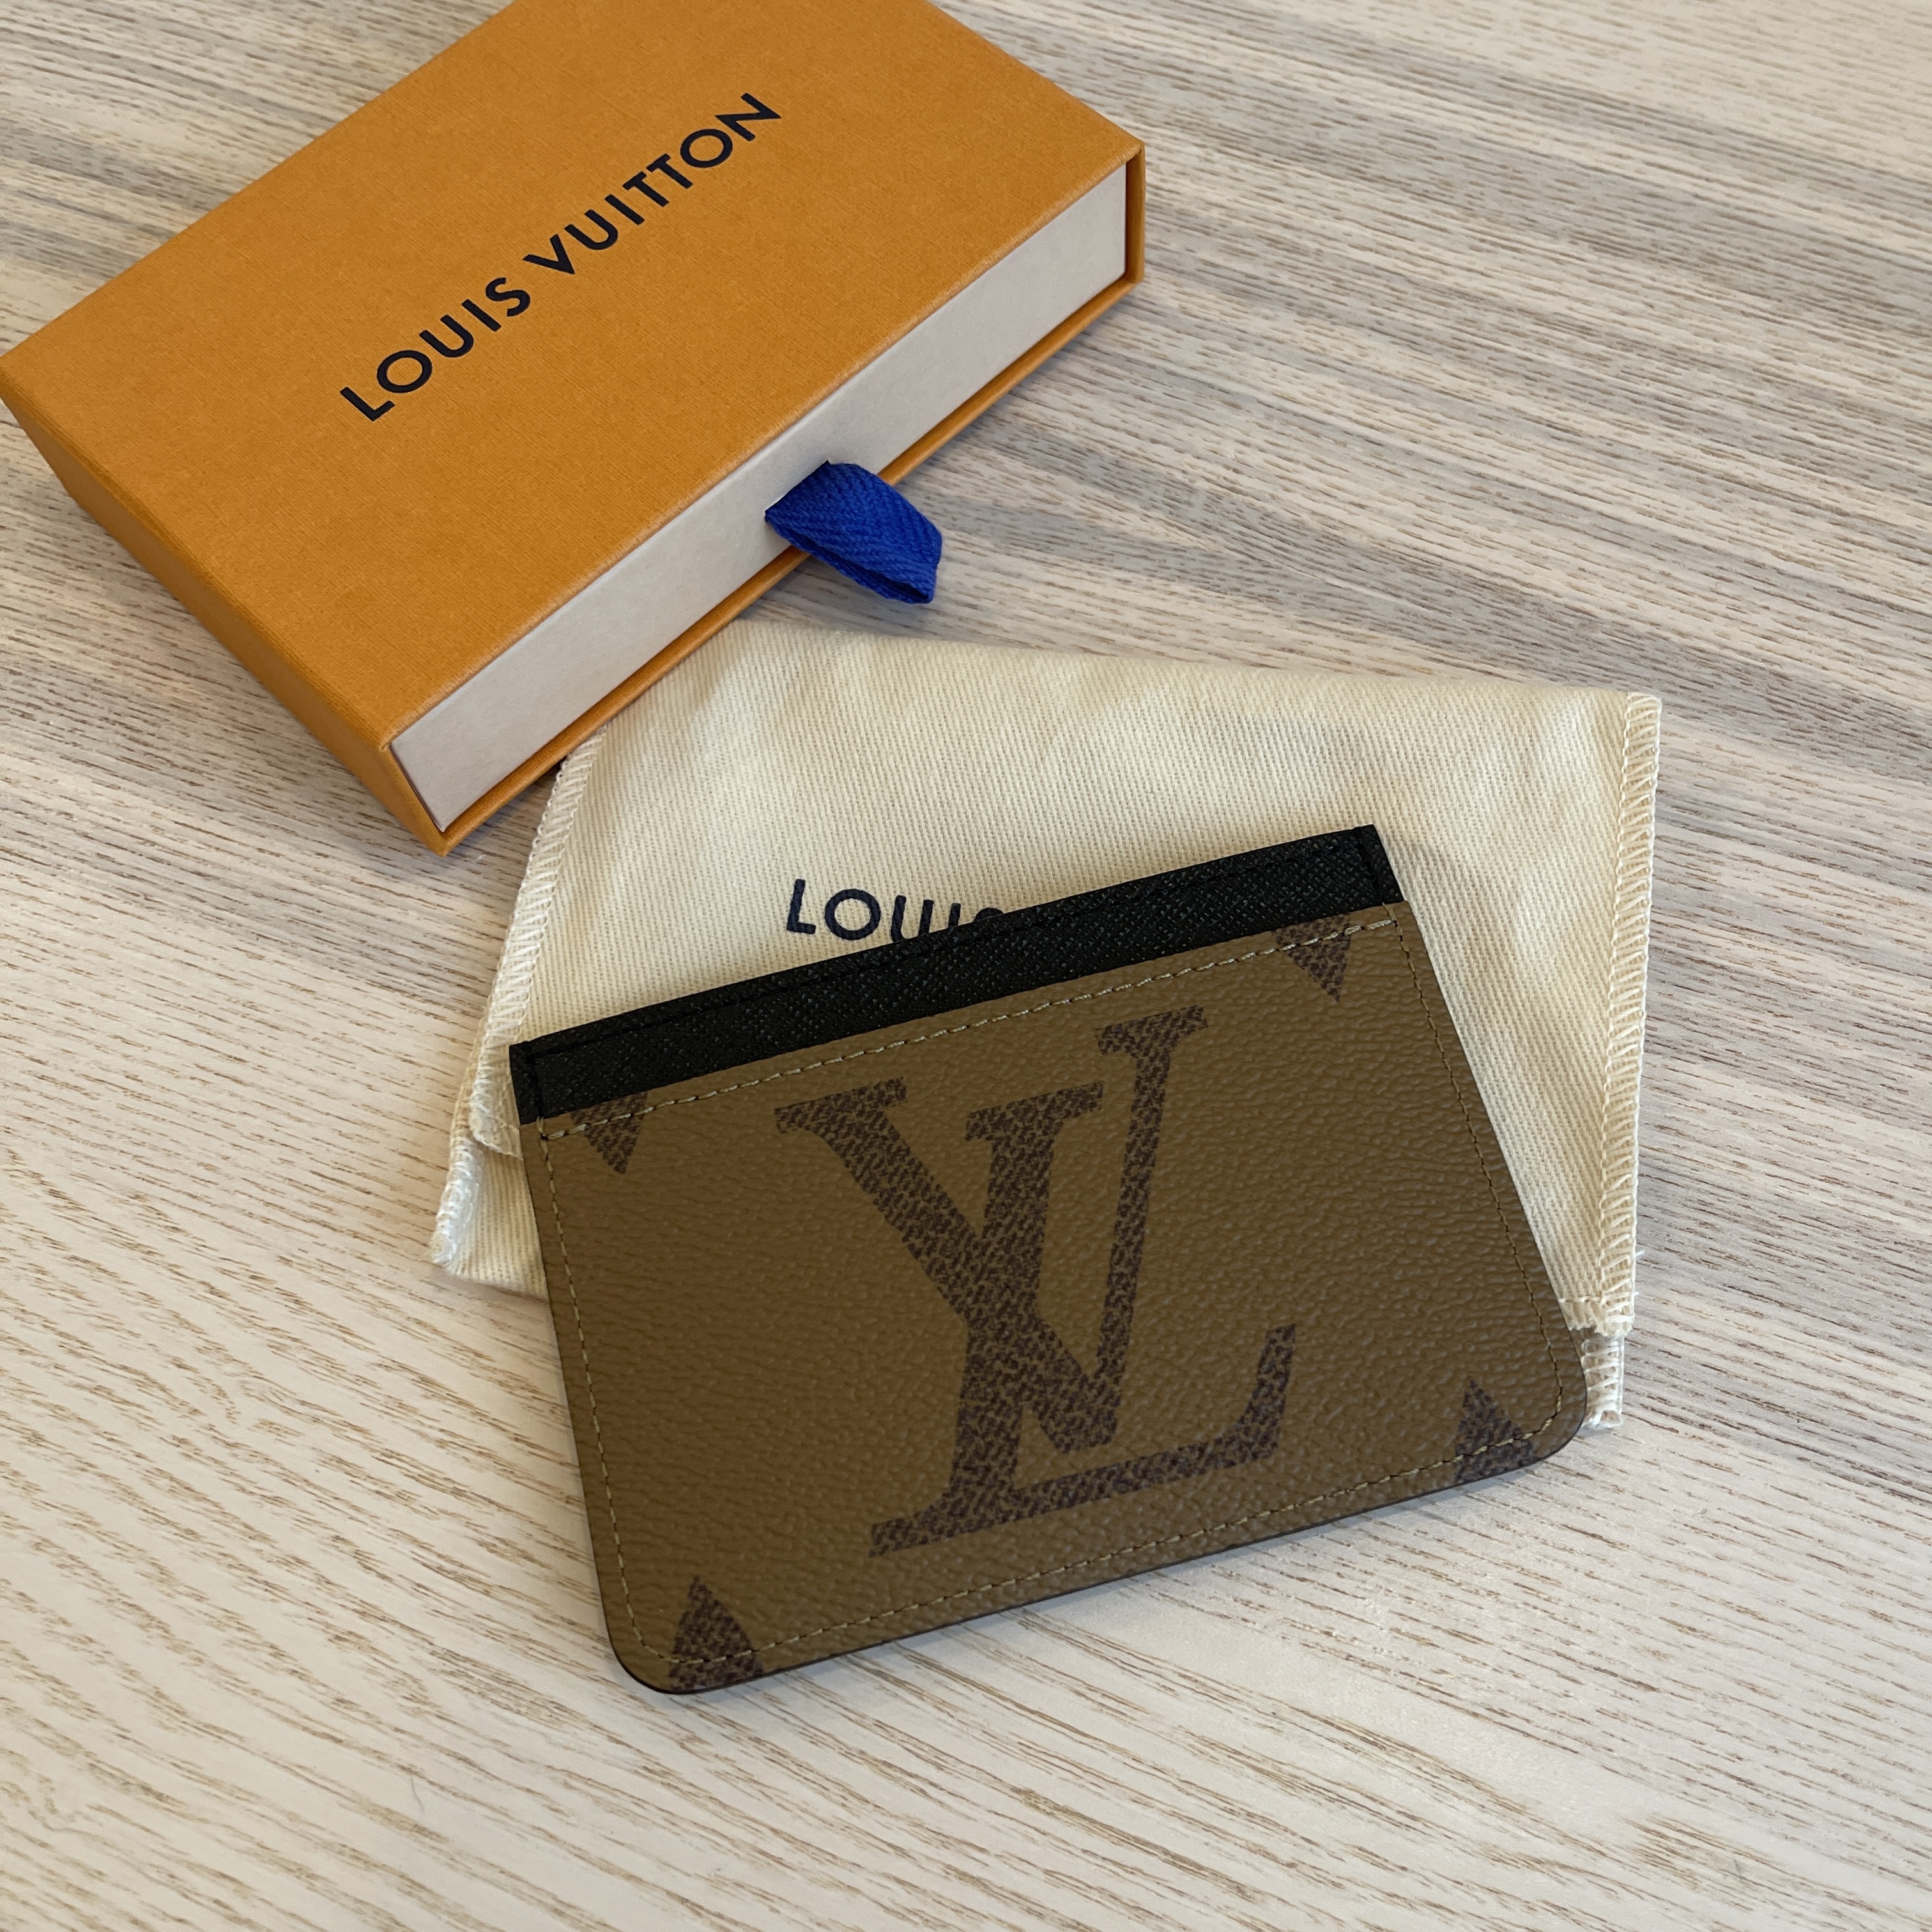 Louis Vuitton Card Holder Review 